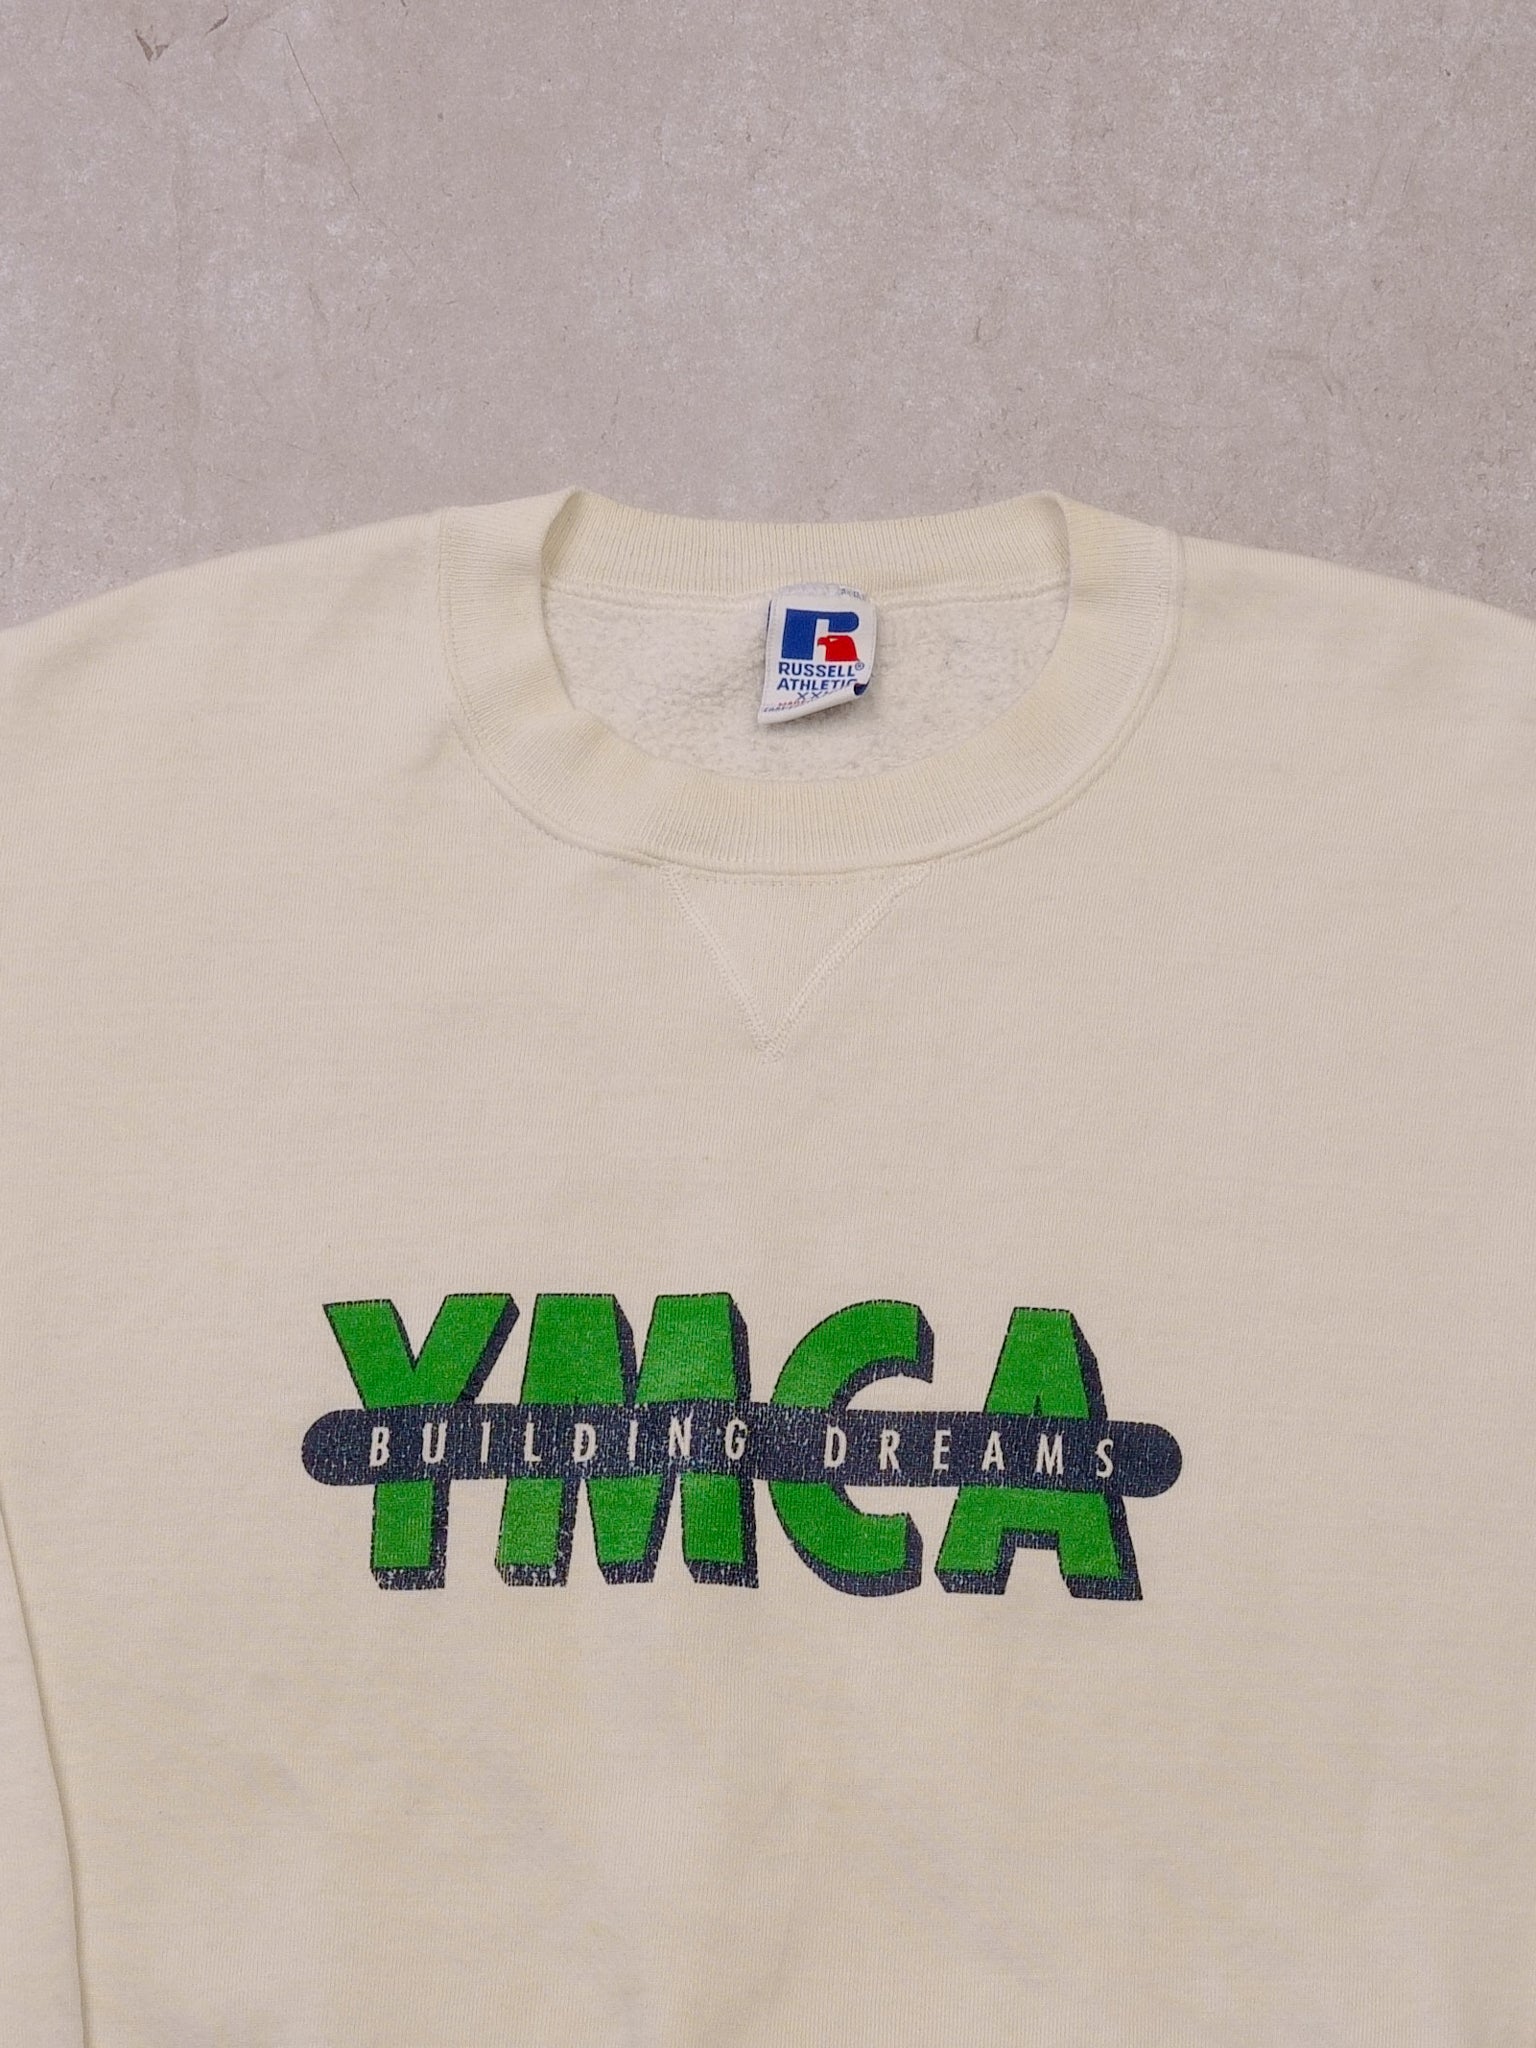 Vintage 90s White YMCA "Building Dreams"  Russell Athetics Crewneck (L)